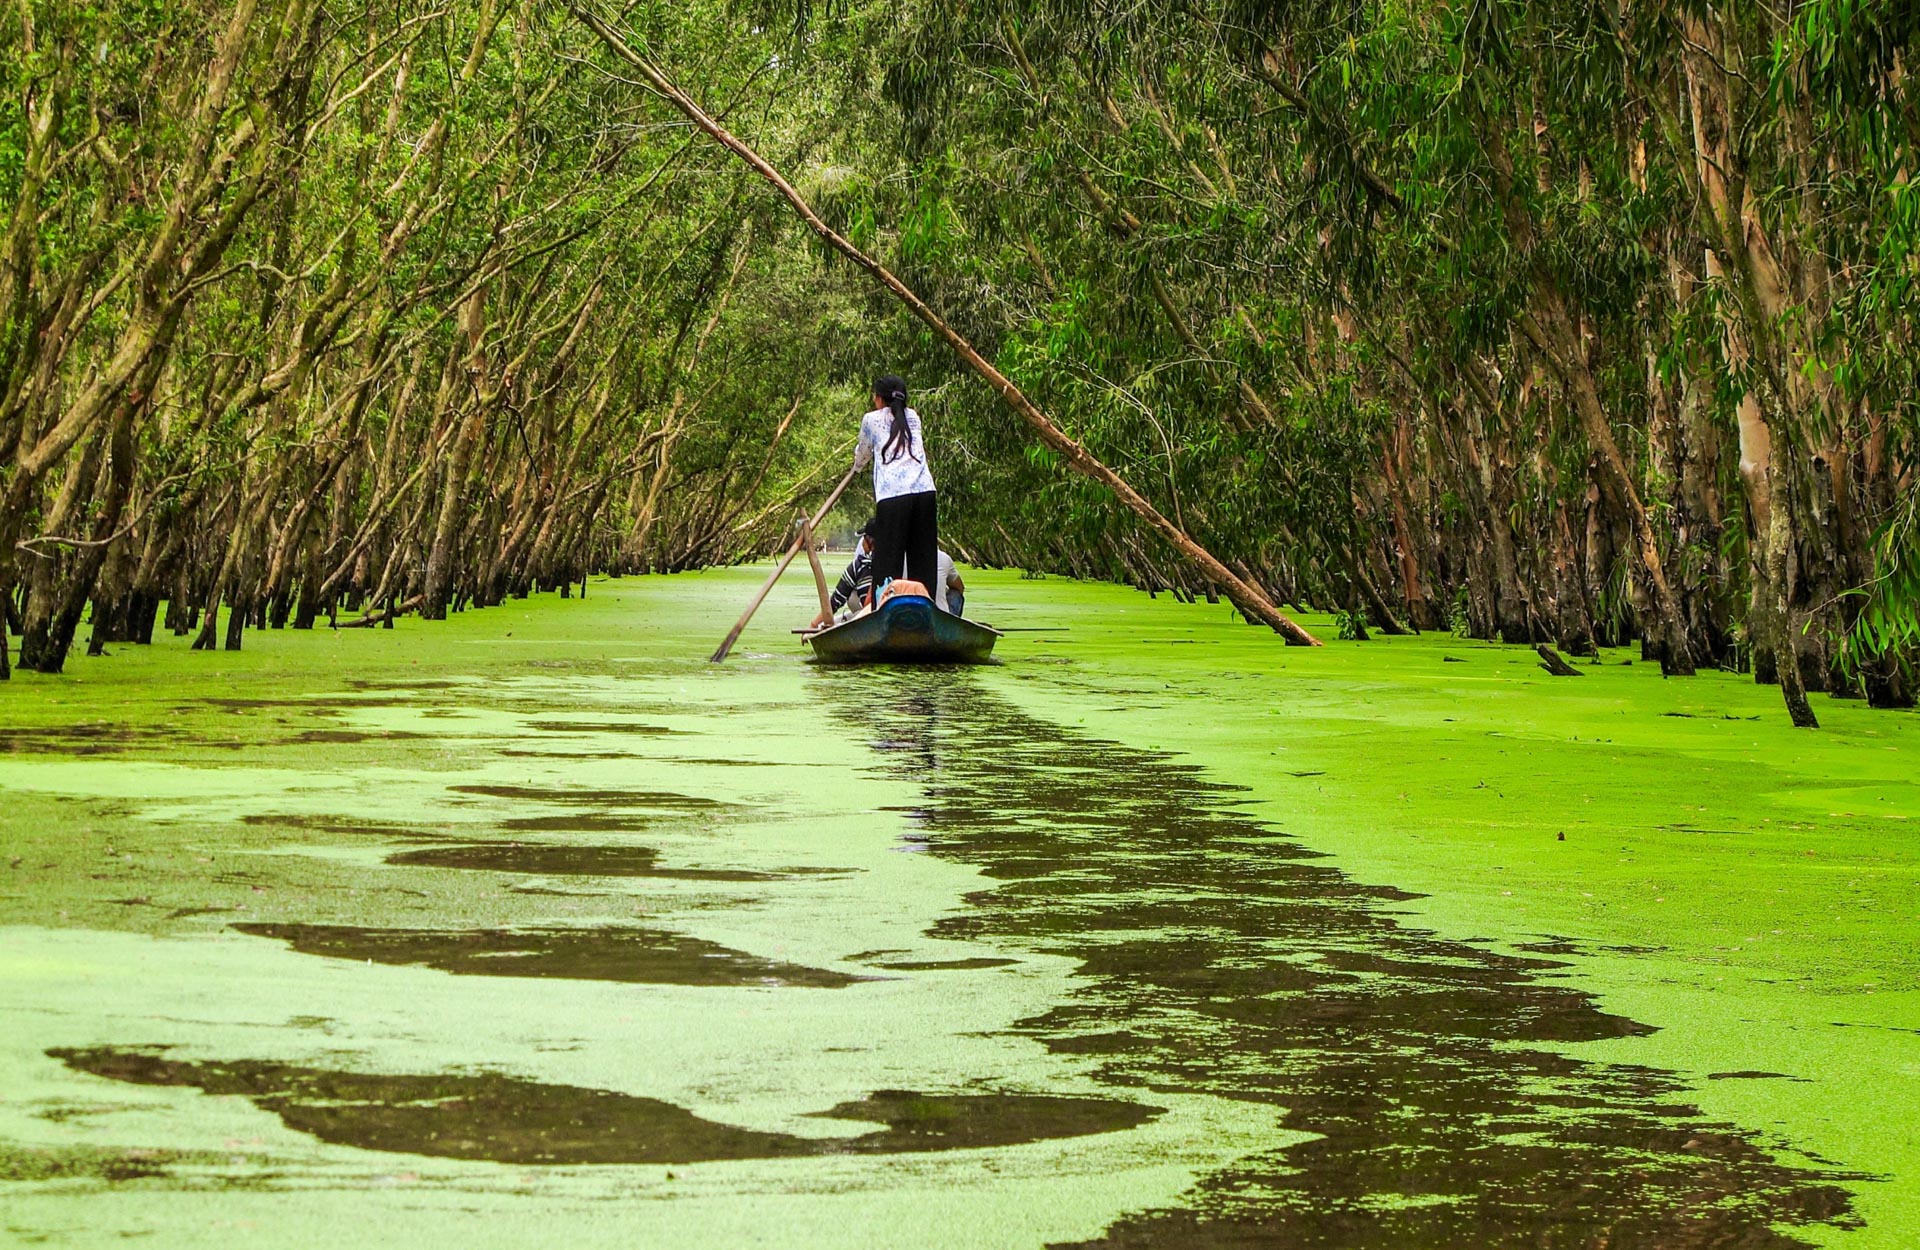 /fm/Files//Pictures/Ido Uploads(1)/Asia/Vietnam/Tra Su/Tra Su - Green River Boat Forest - SS.jpg